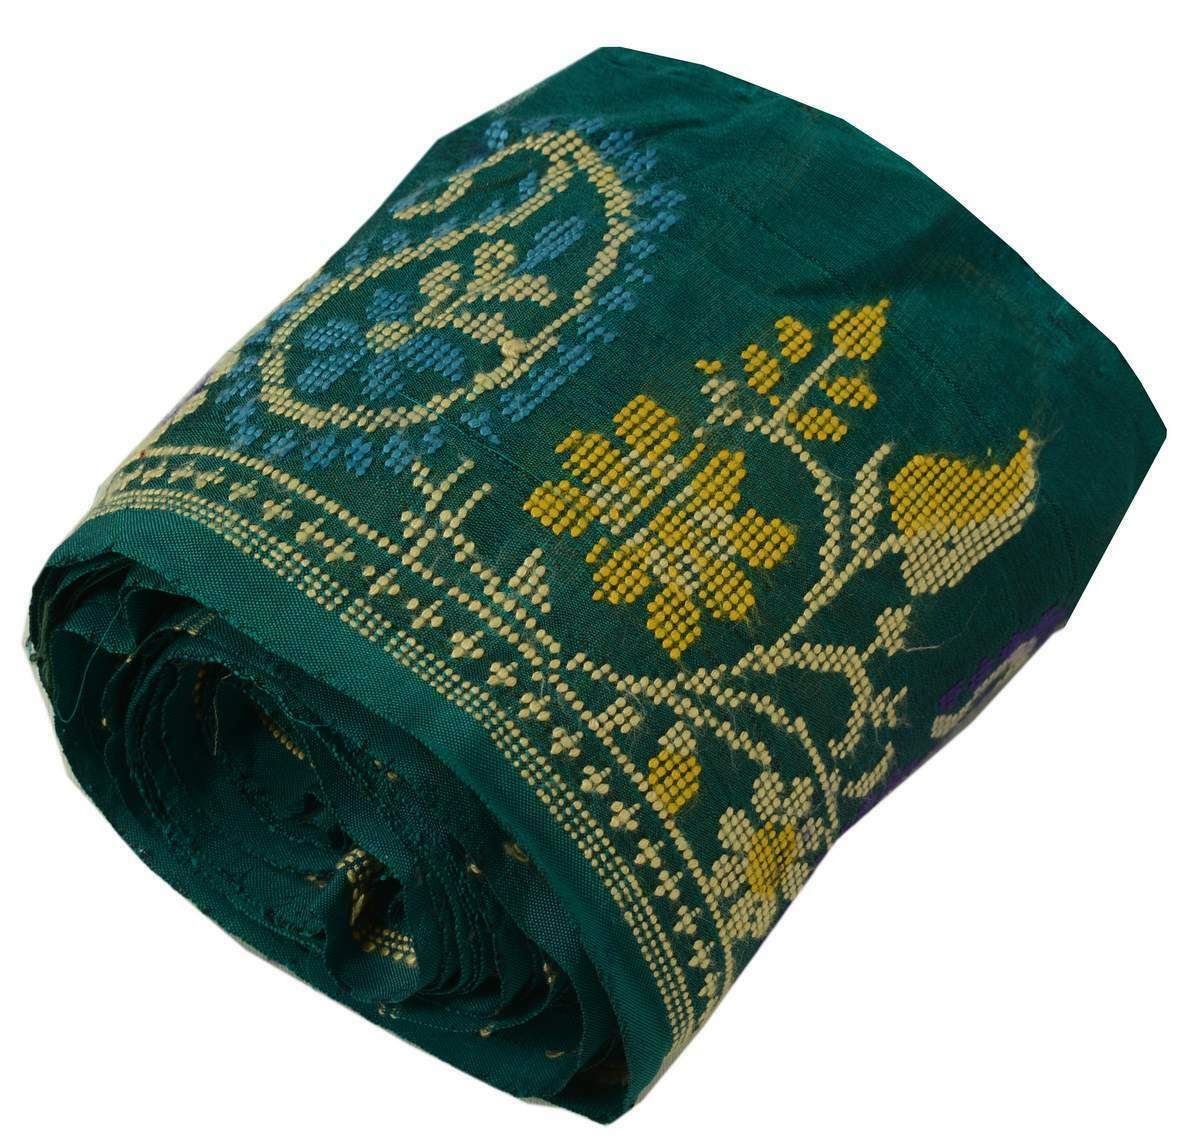 3.75" W Vintage Sari Border Indian Craft Trim Woven Pasiely Green Lace Ribbon